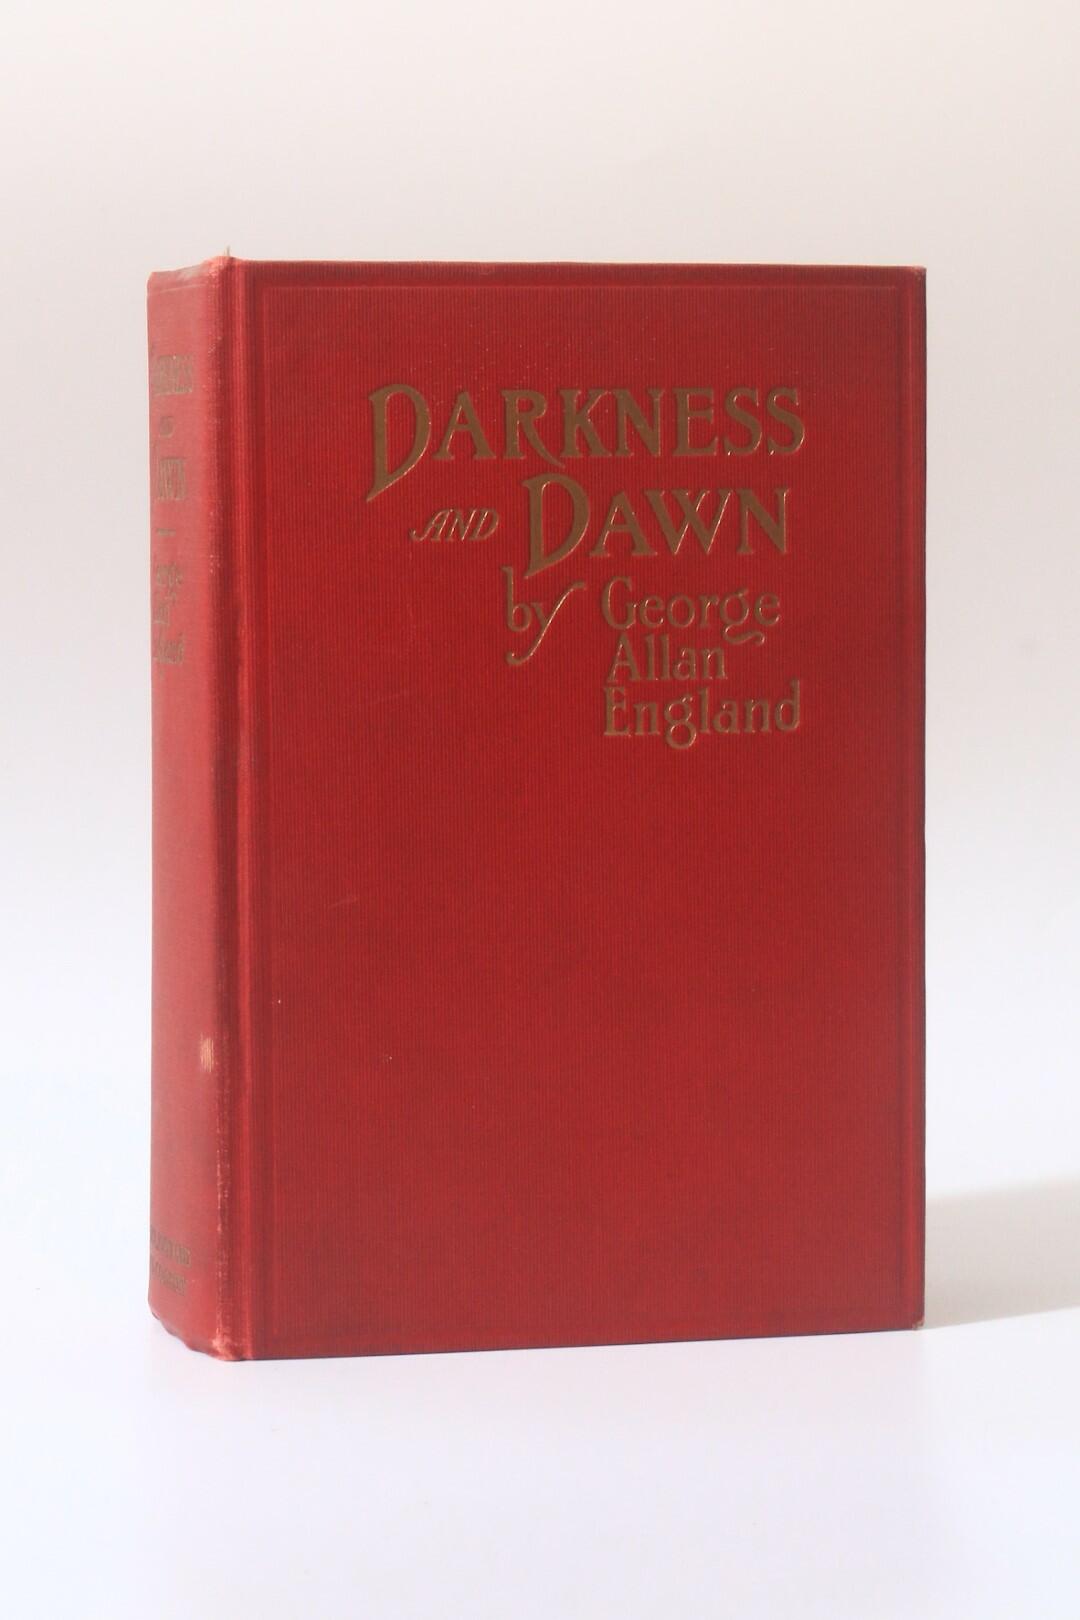 George Allan England - Darkness and Dawn - Small, Maynard & Company, 1914, First Edition.